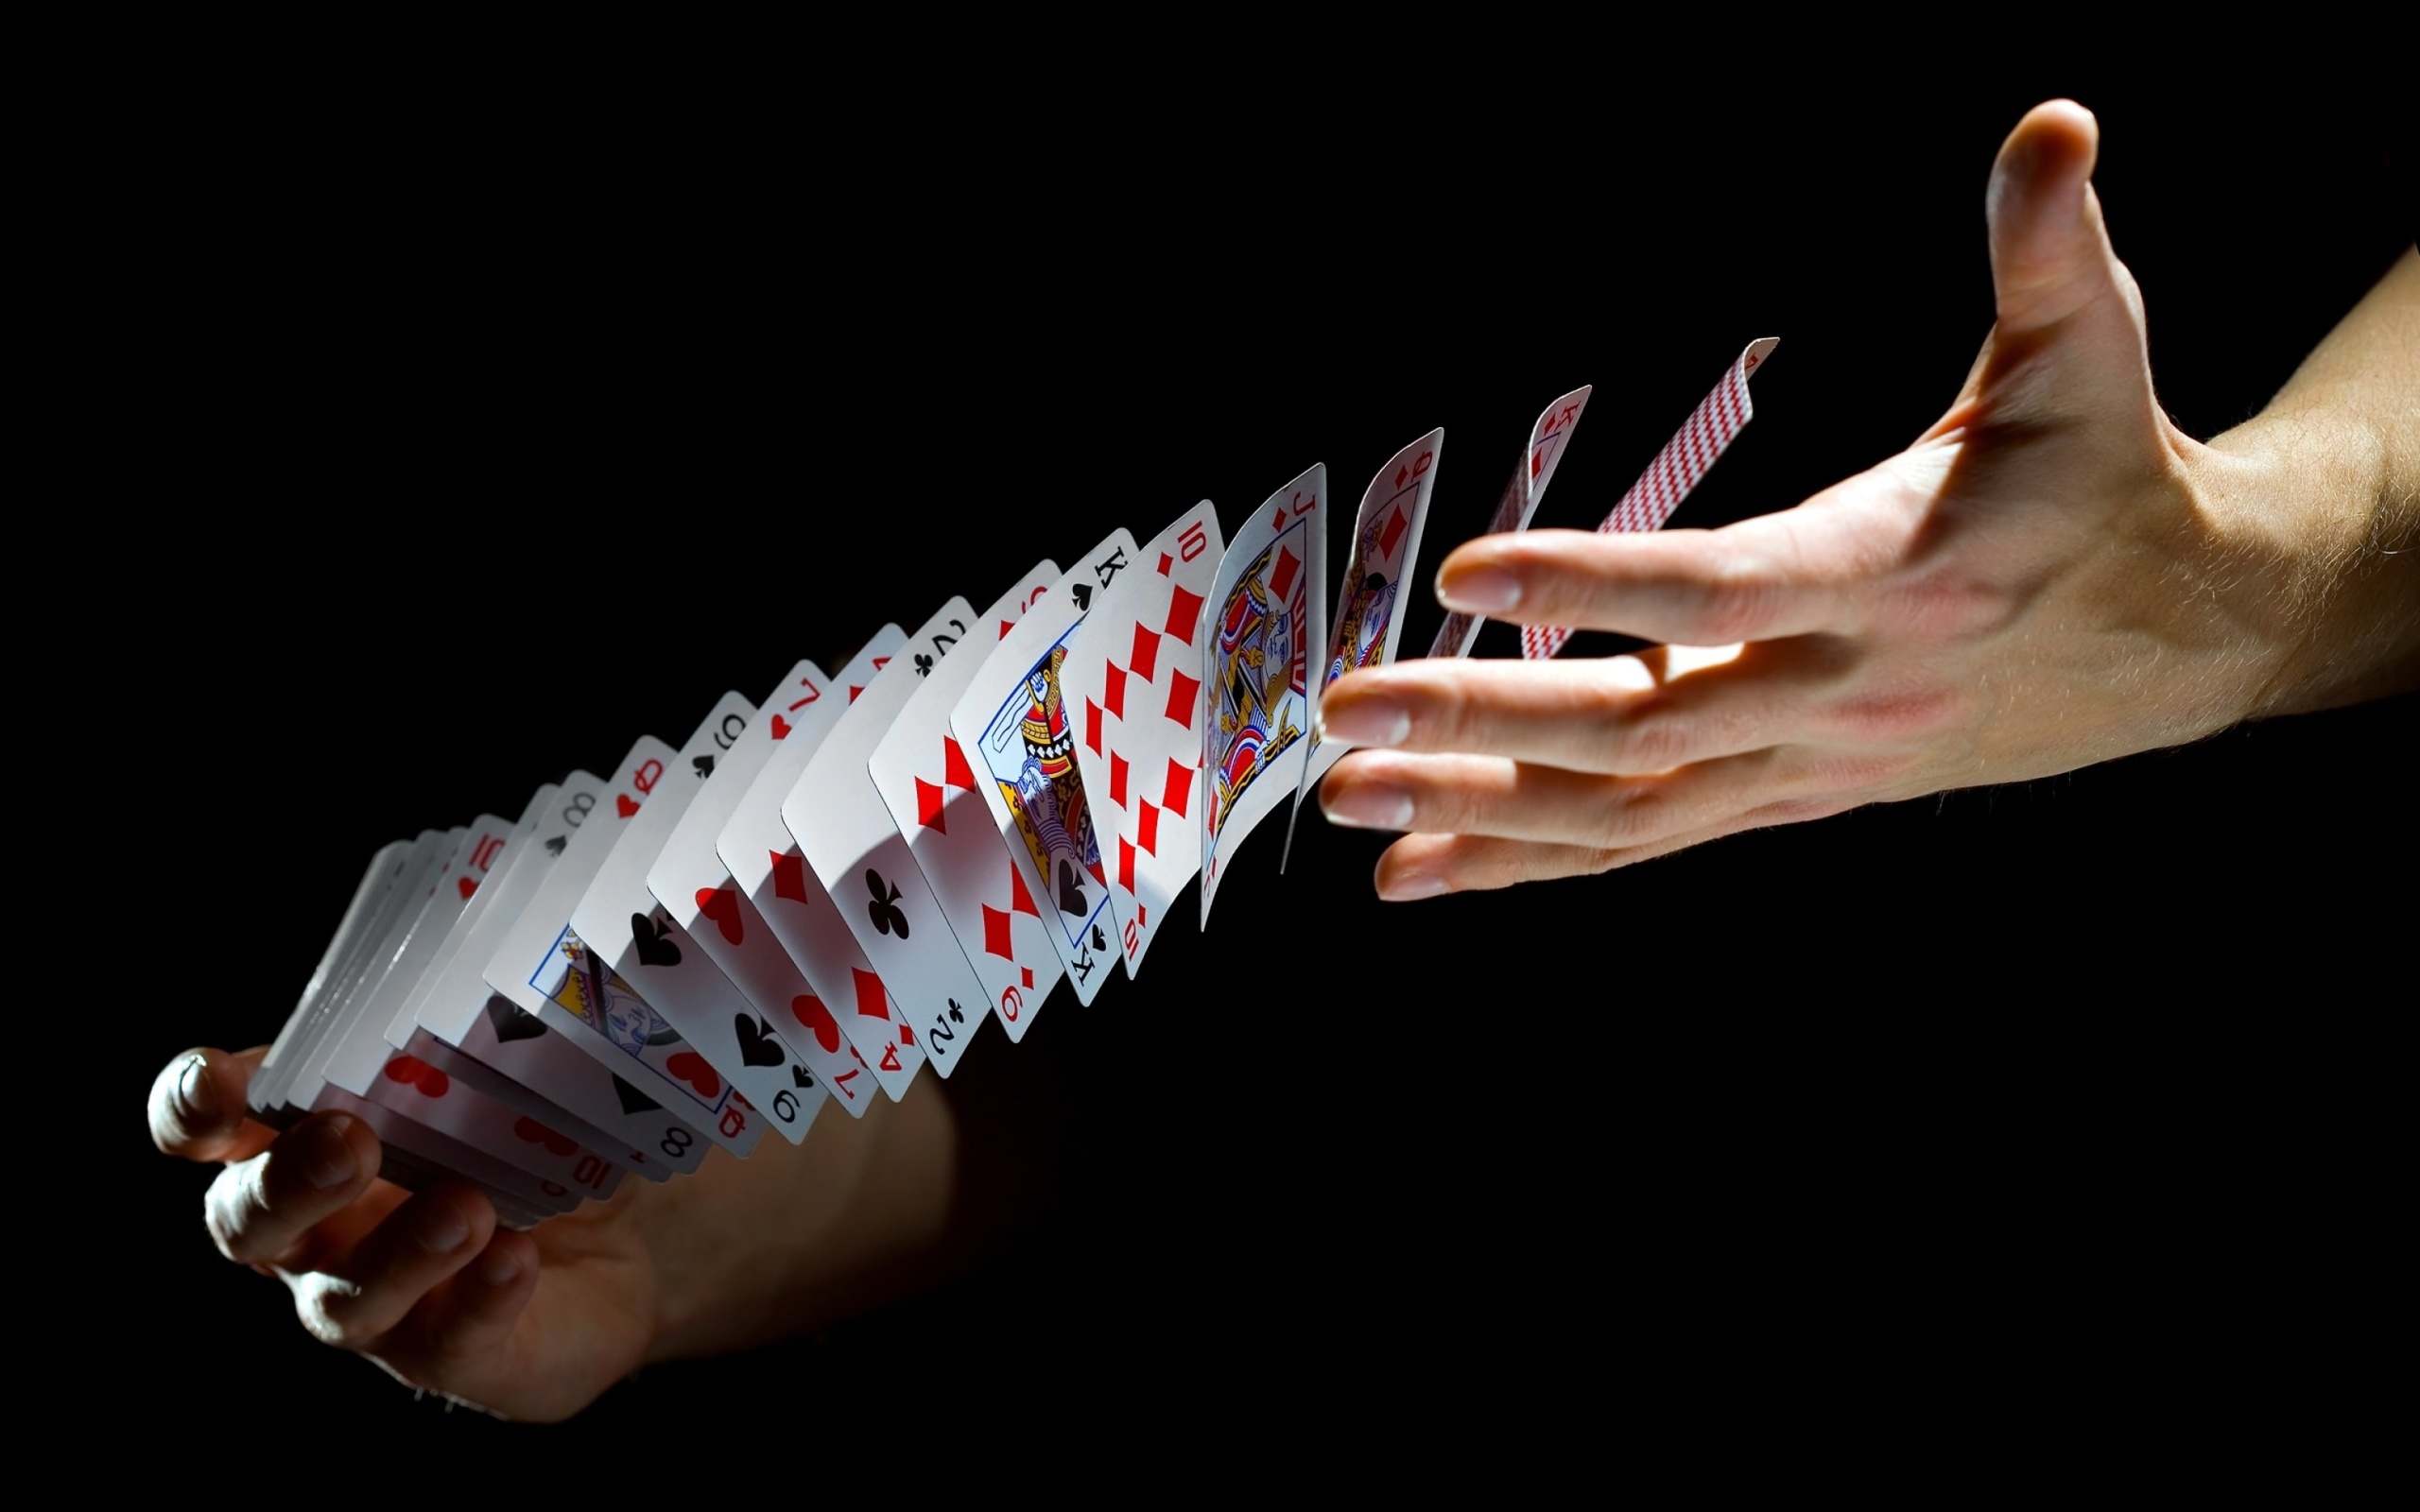 Das Playing cards trick Wallpaper 2560x1600